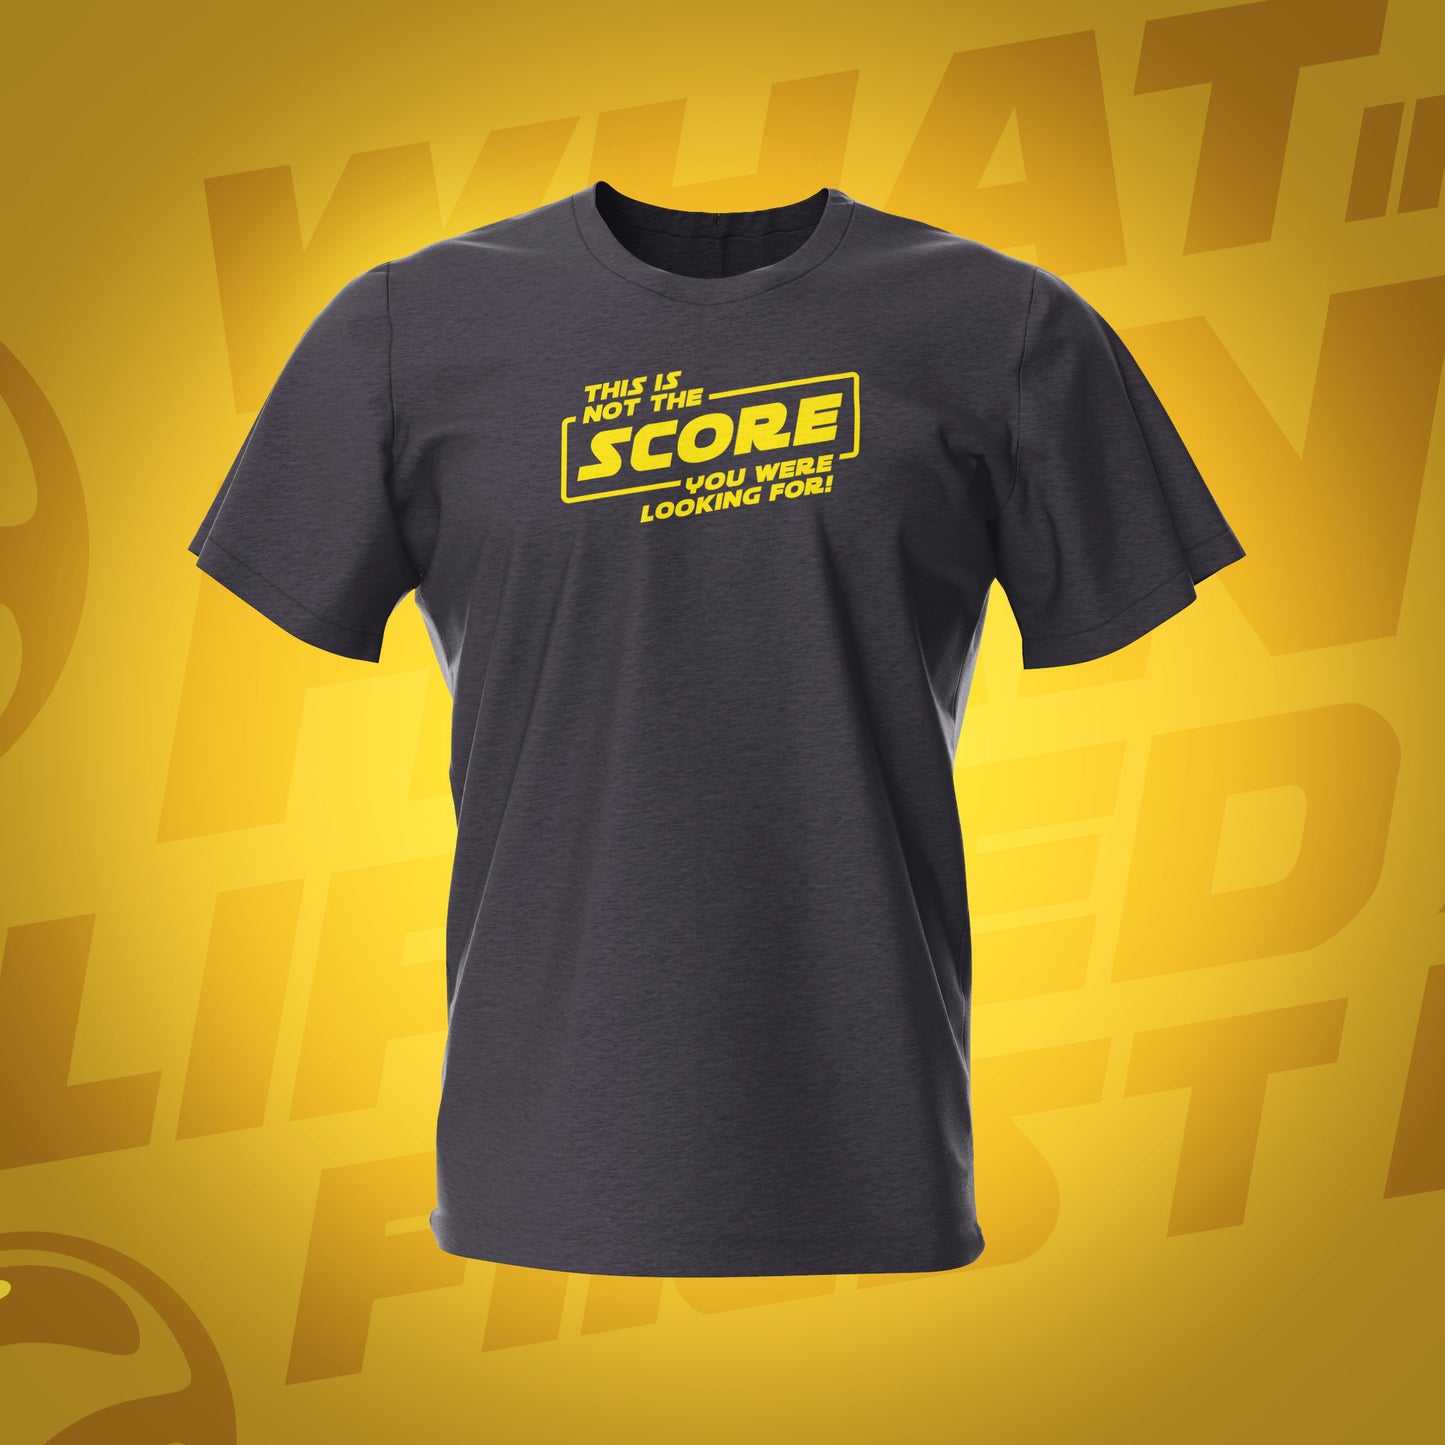 Star Wars Parody Shirt Collection